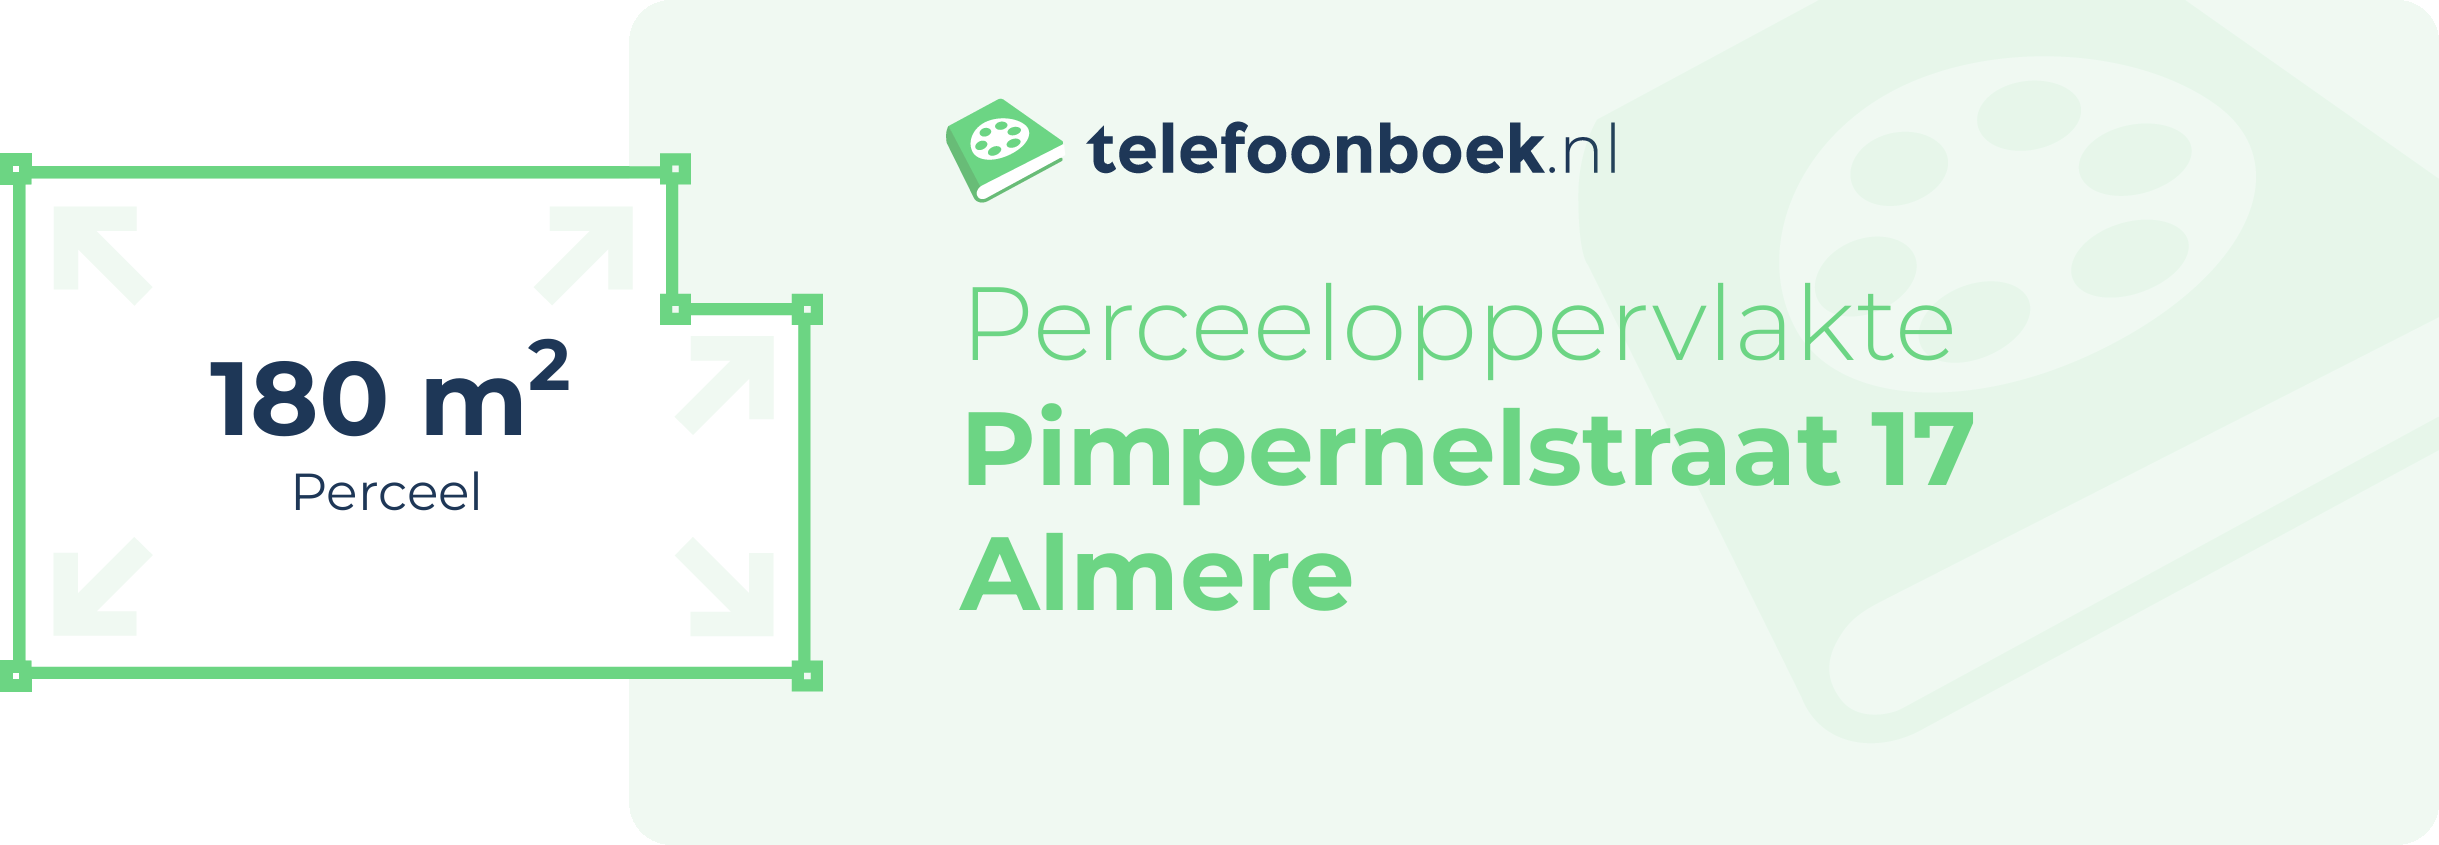 Perceeloppervlakte Pimpernelstraat 17 Almere